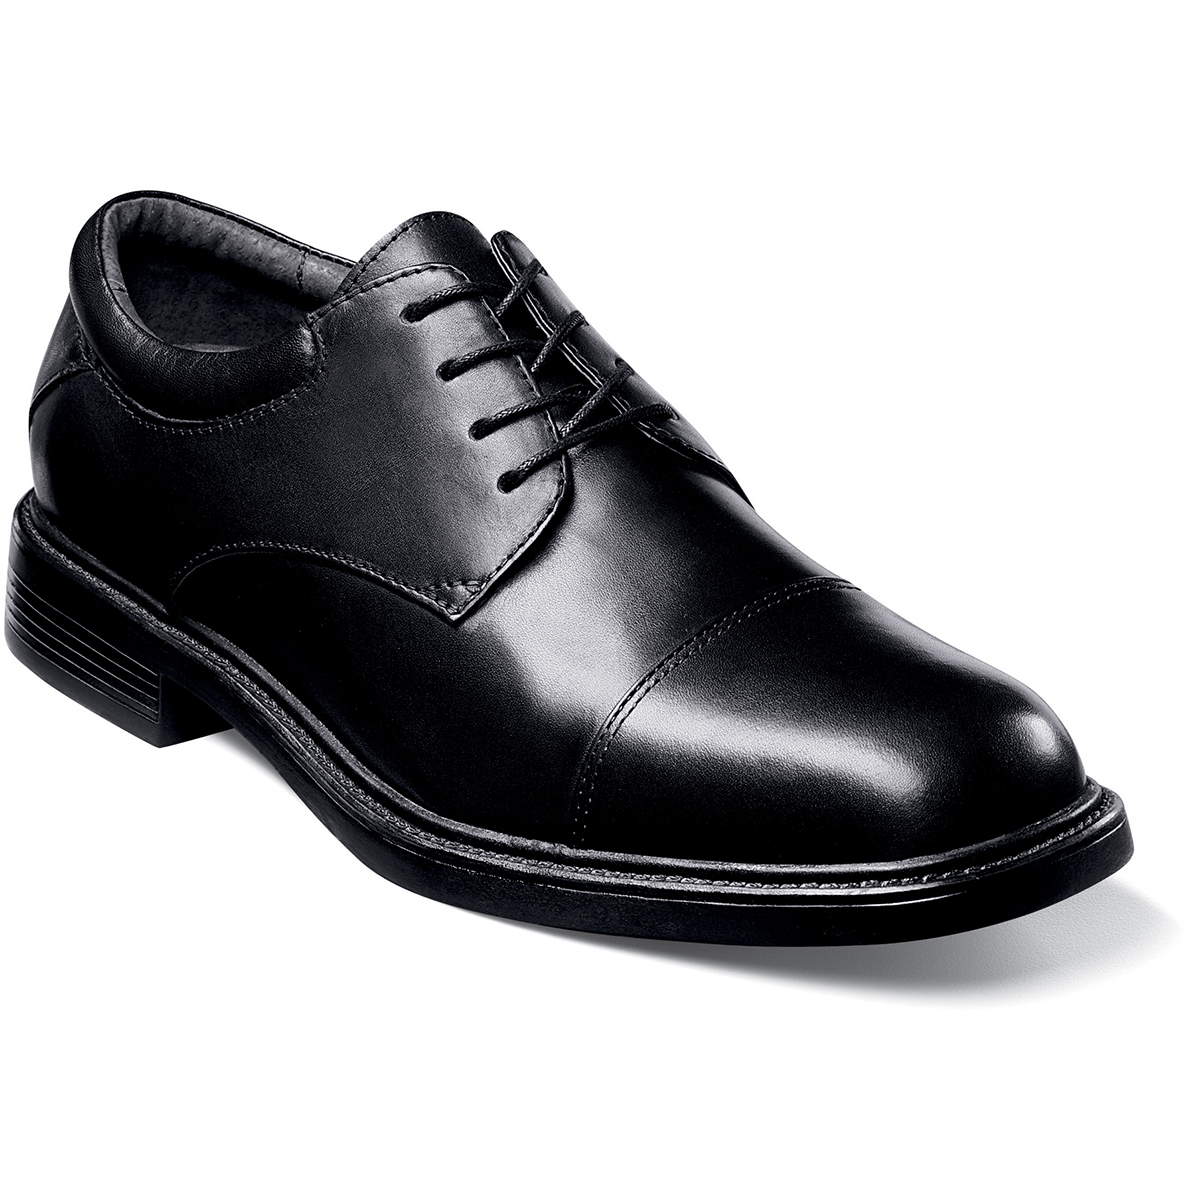 Men's Comfort Gel Shoes | Black Cap Toe Oxford | Nunn Bush Maxwell